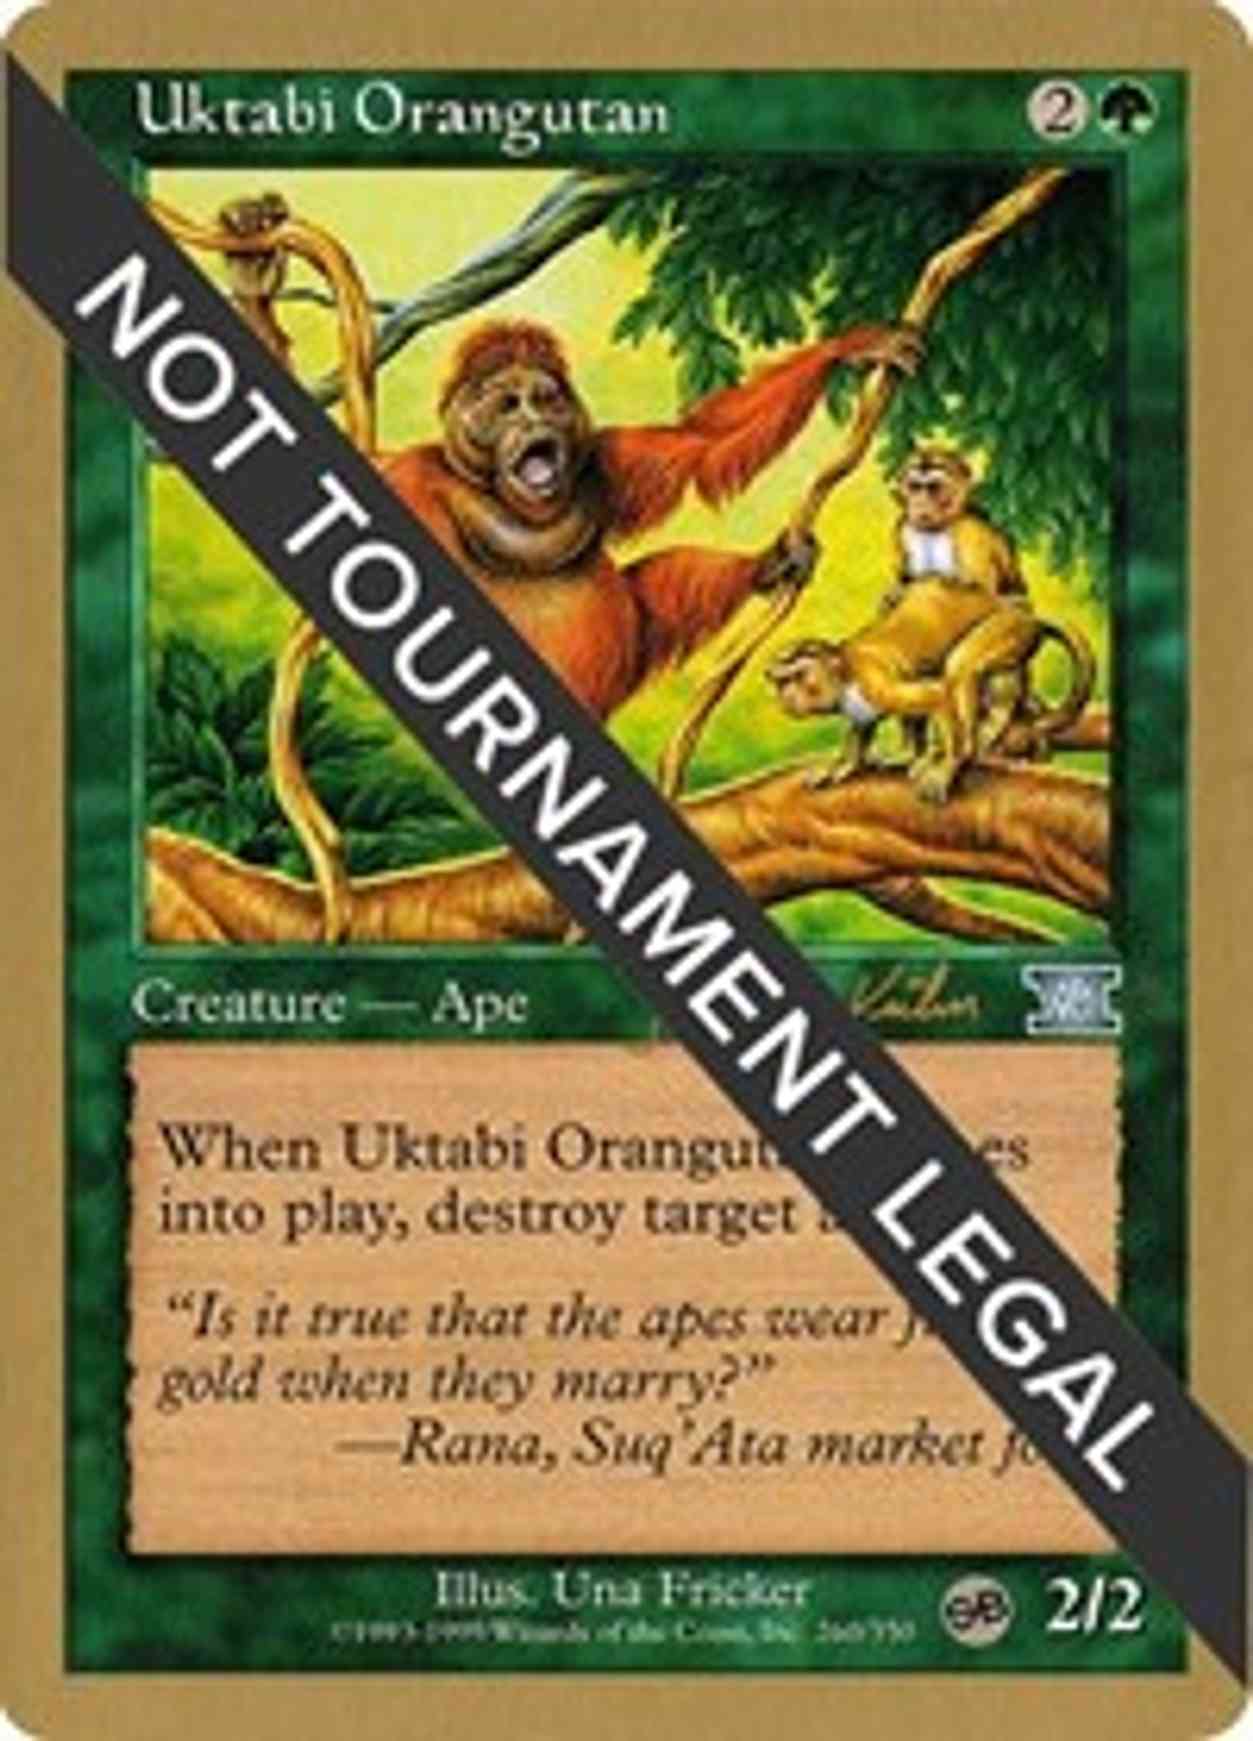 Uktabi Orangutan - 2000 Janosch Kuhn (6ED) (SB) magic card front